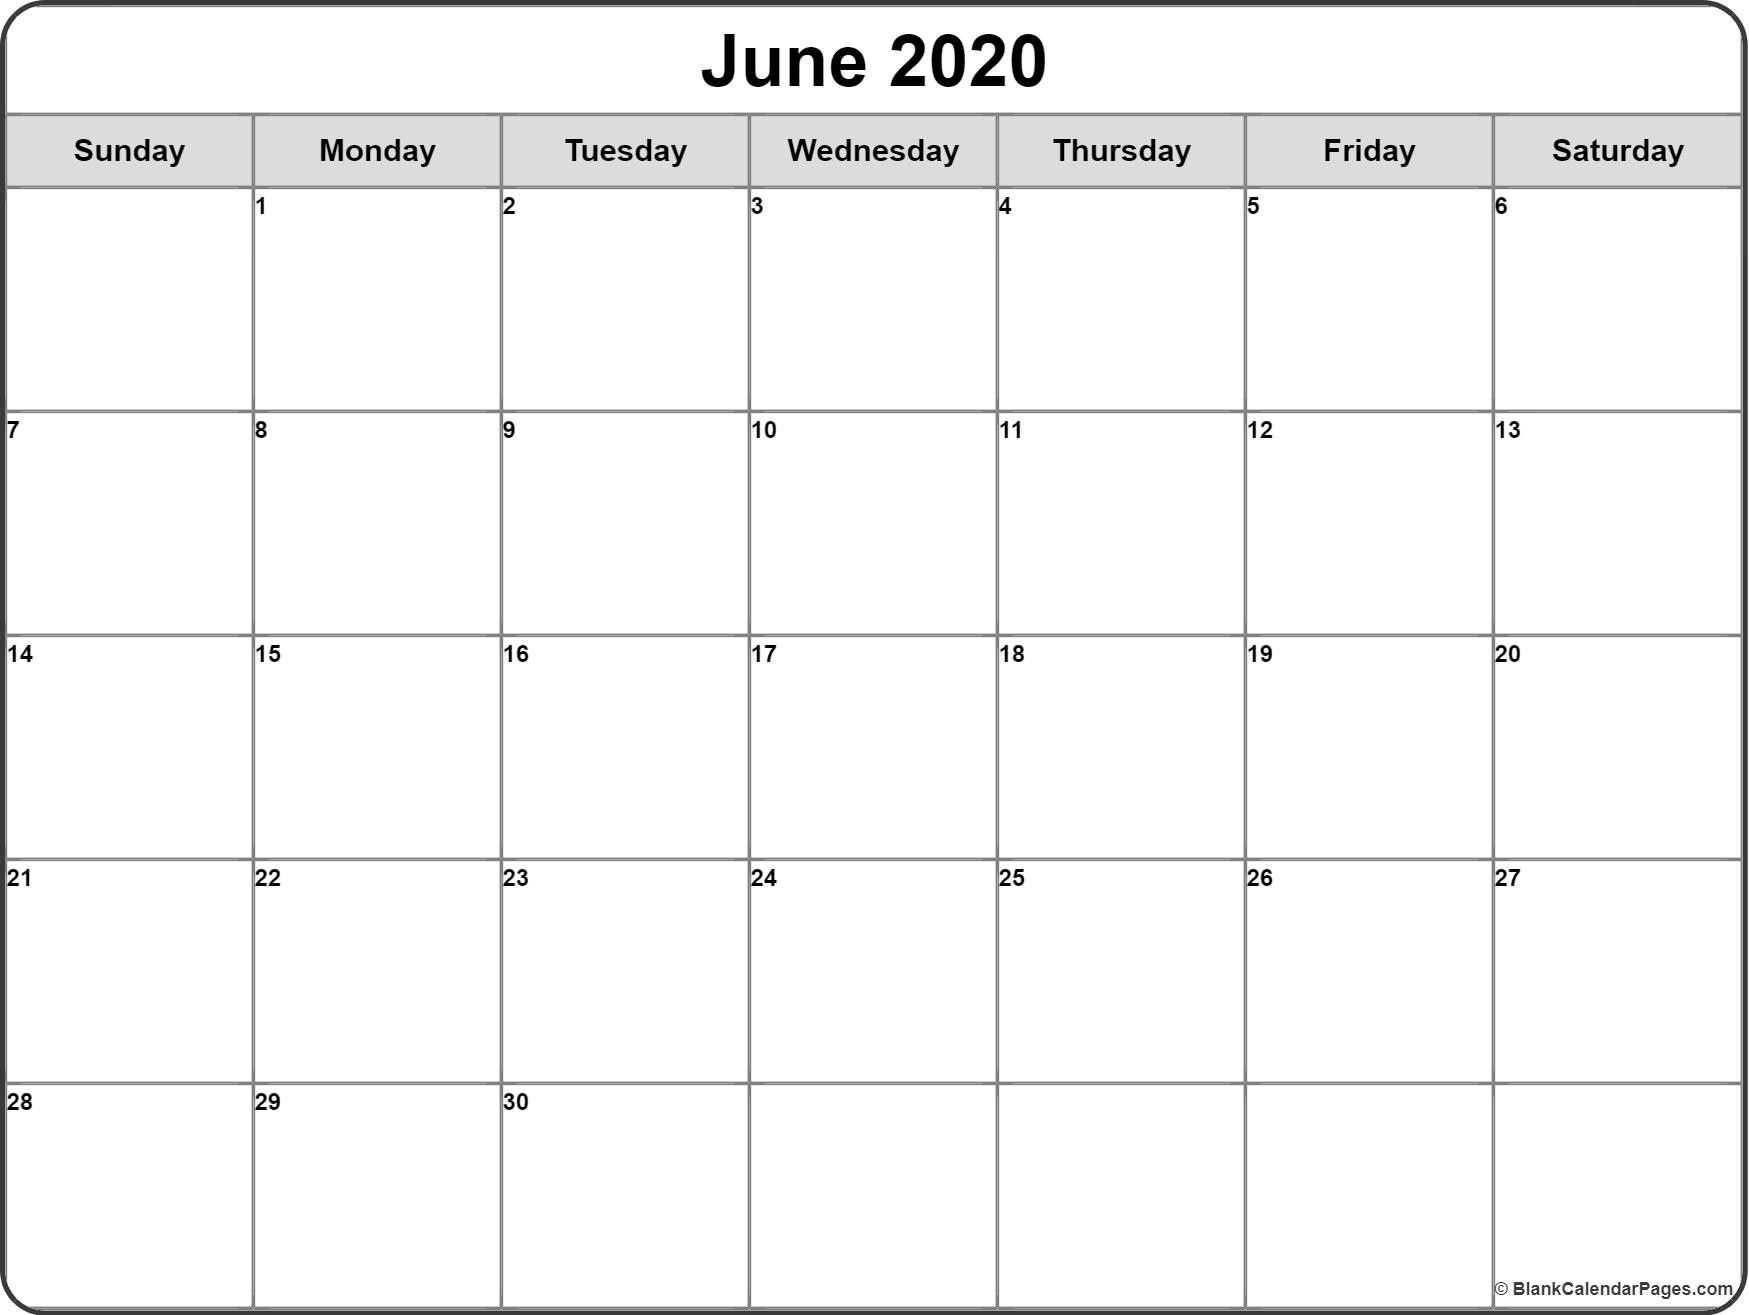 June 2020 Calendar | Free Printable Monthly Calendars-Monthly June 2020 Calendar